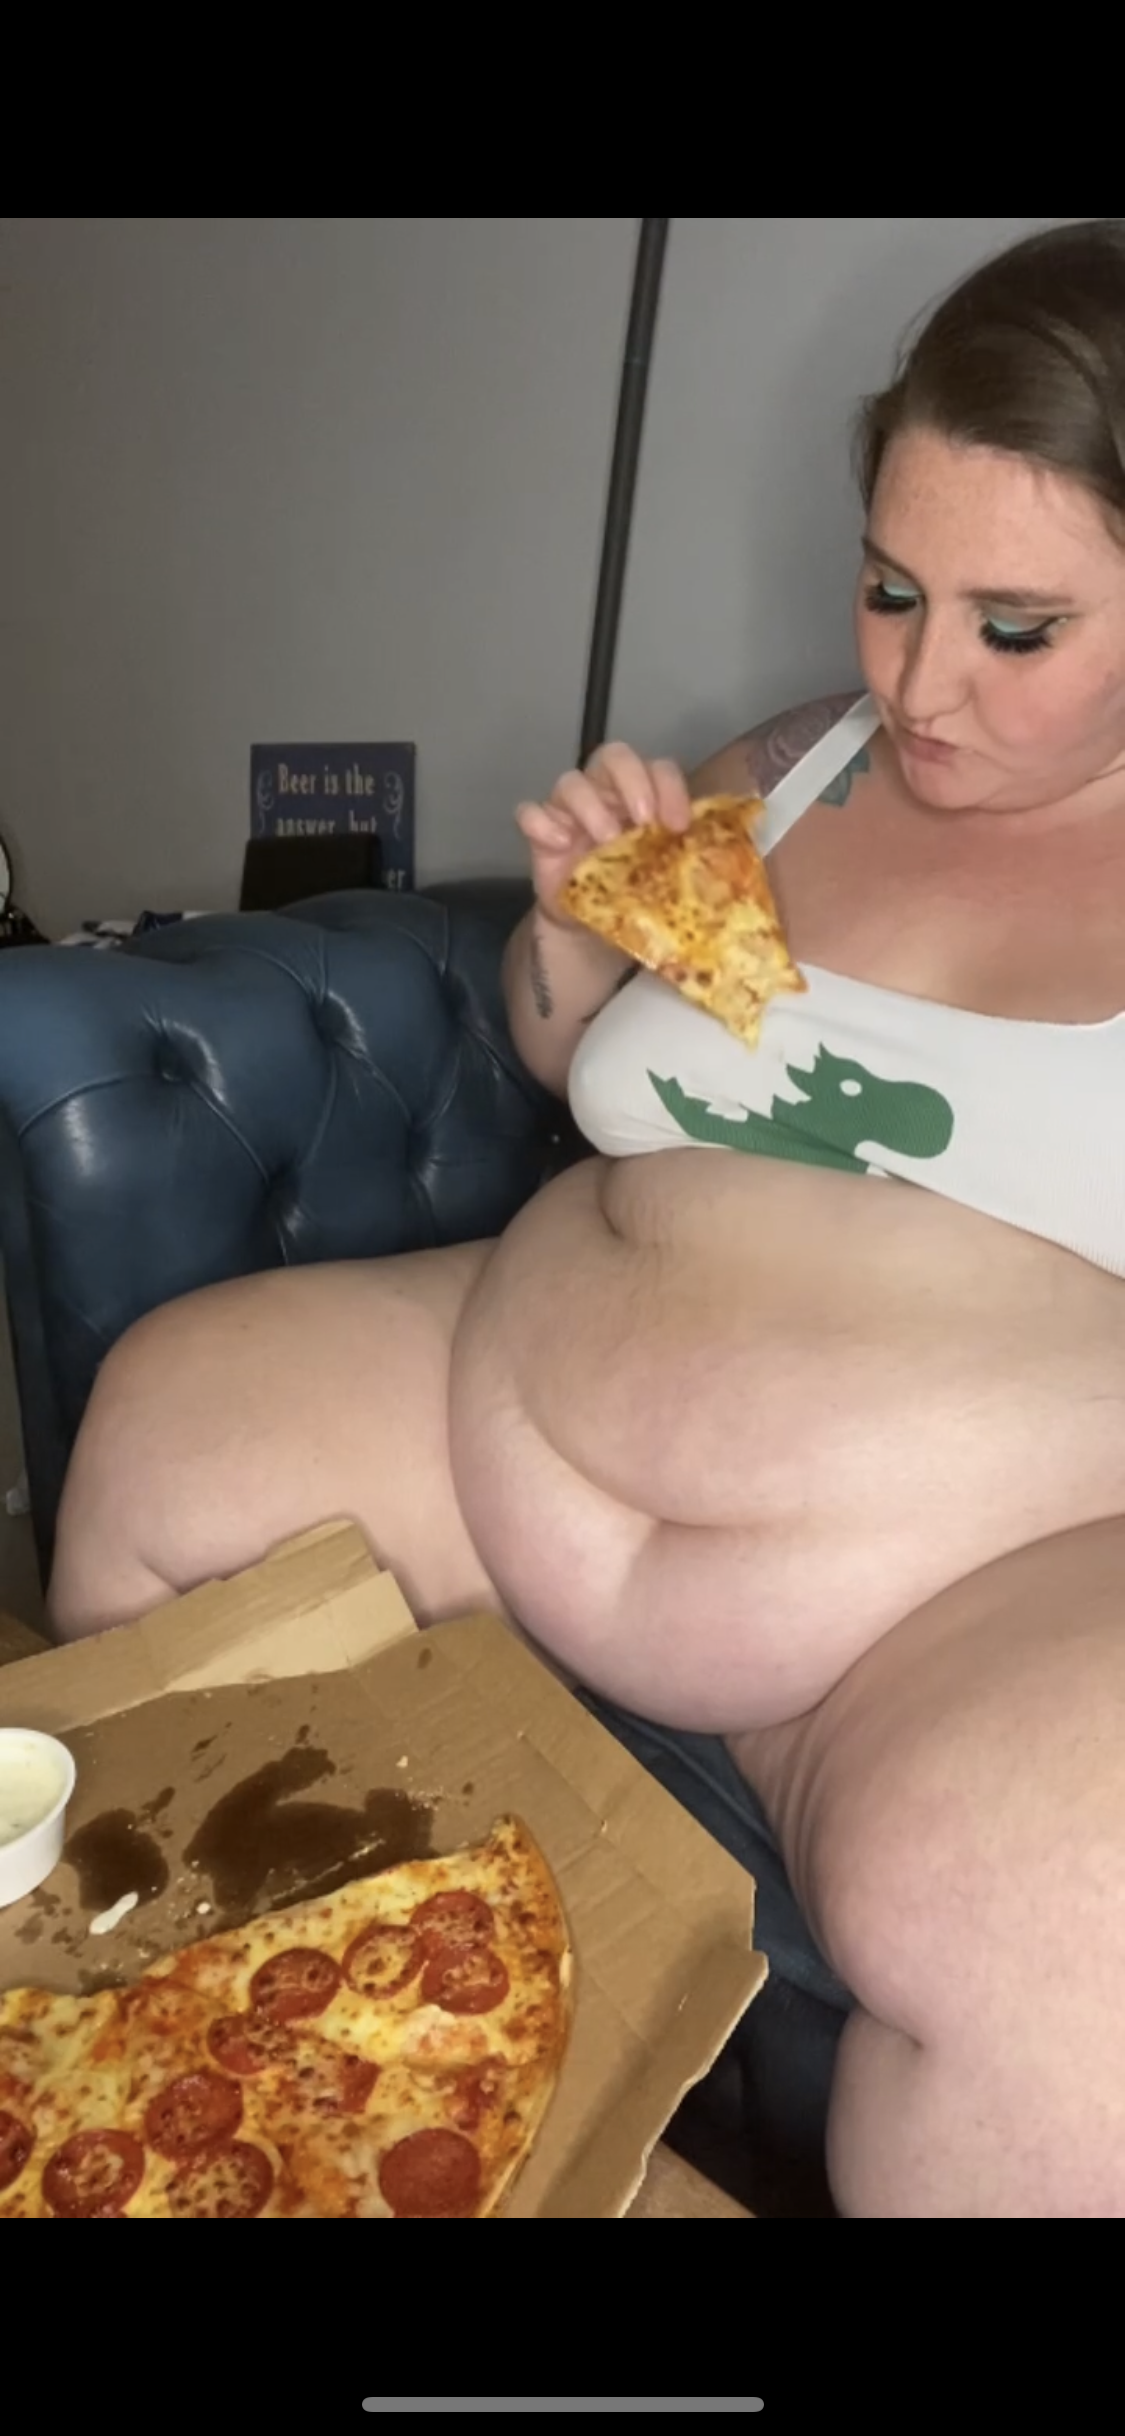 chris hibshman add naked girl eating pizza photo